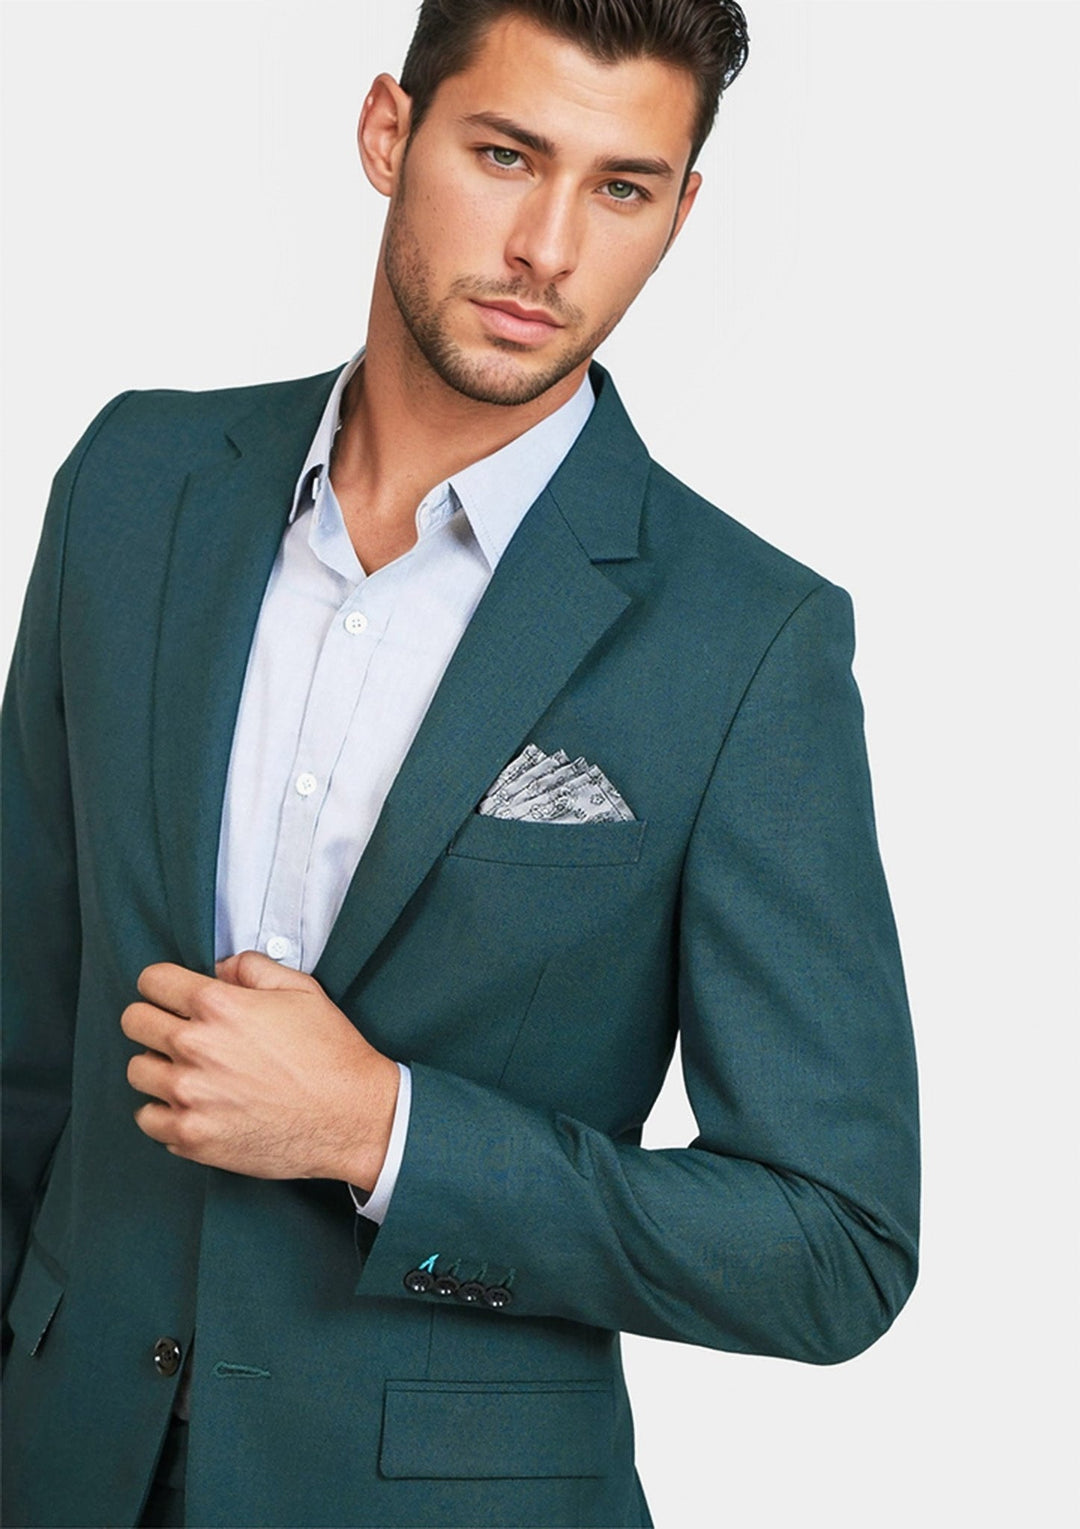 Astor Sacramento Green Suit - SARTORO